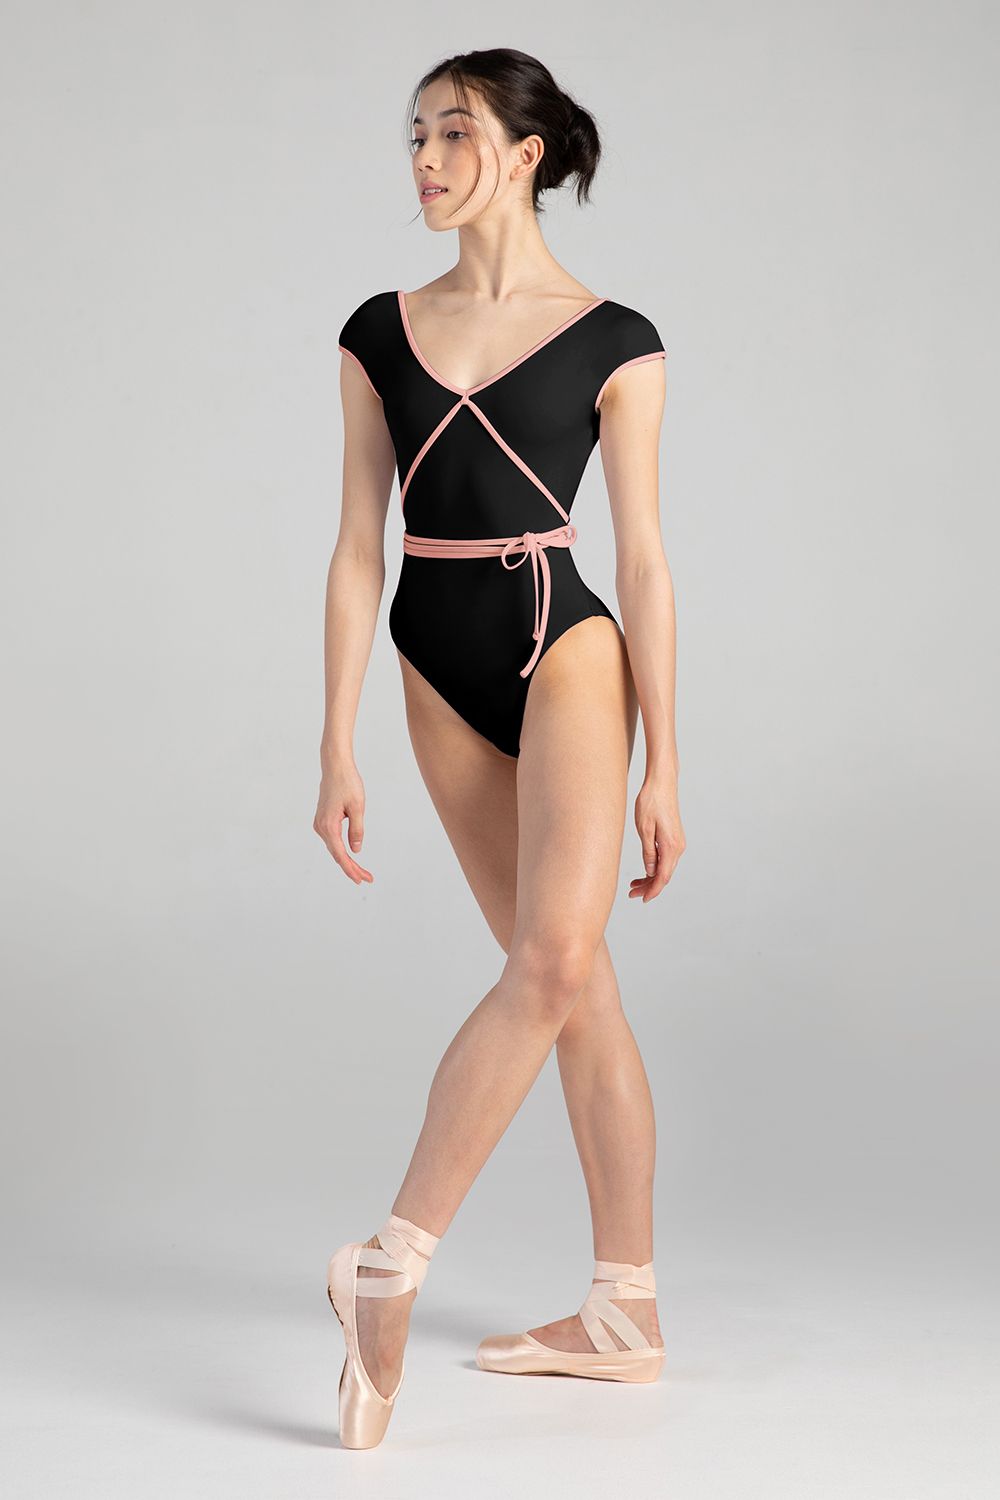 Black Classic Short Sleeve Ballet Leotard for Women – The Dance Bible